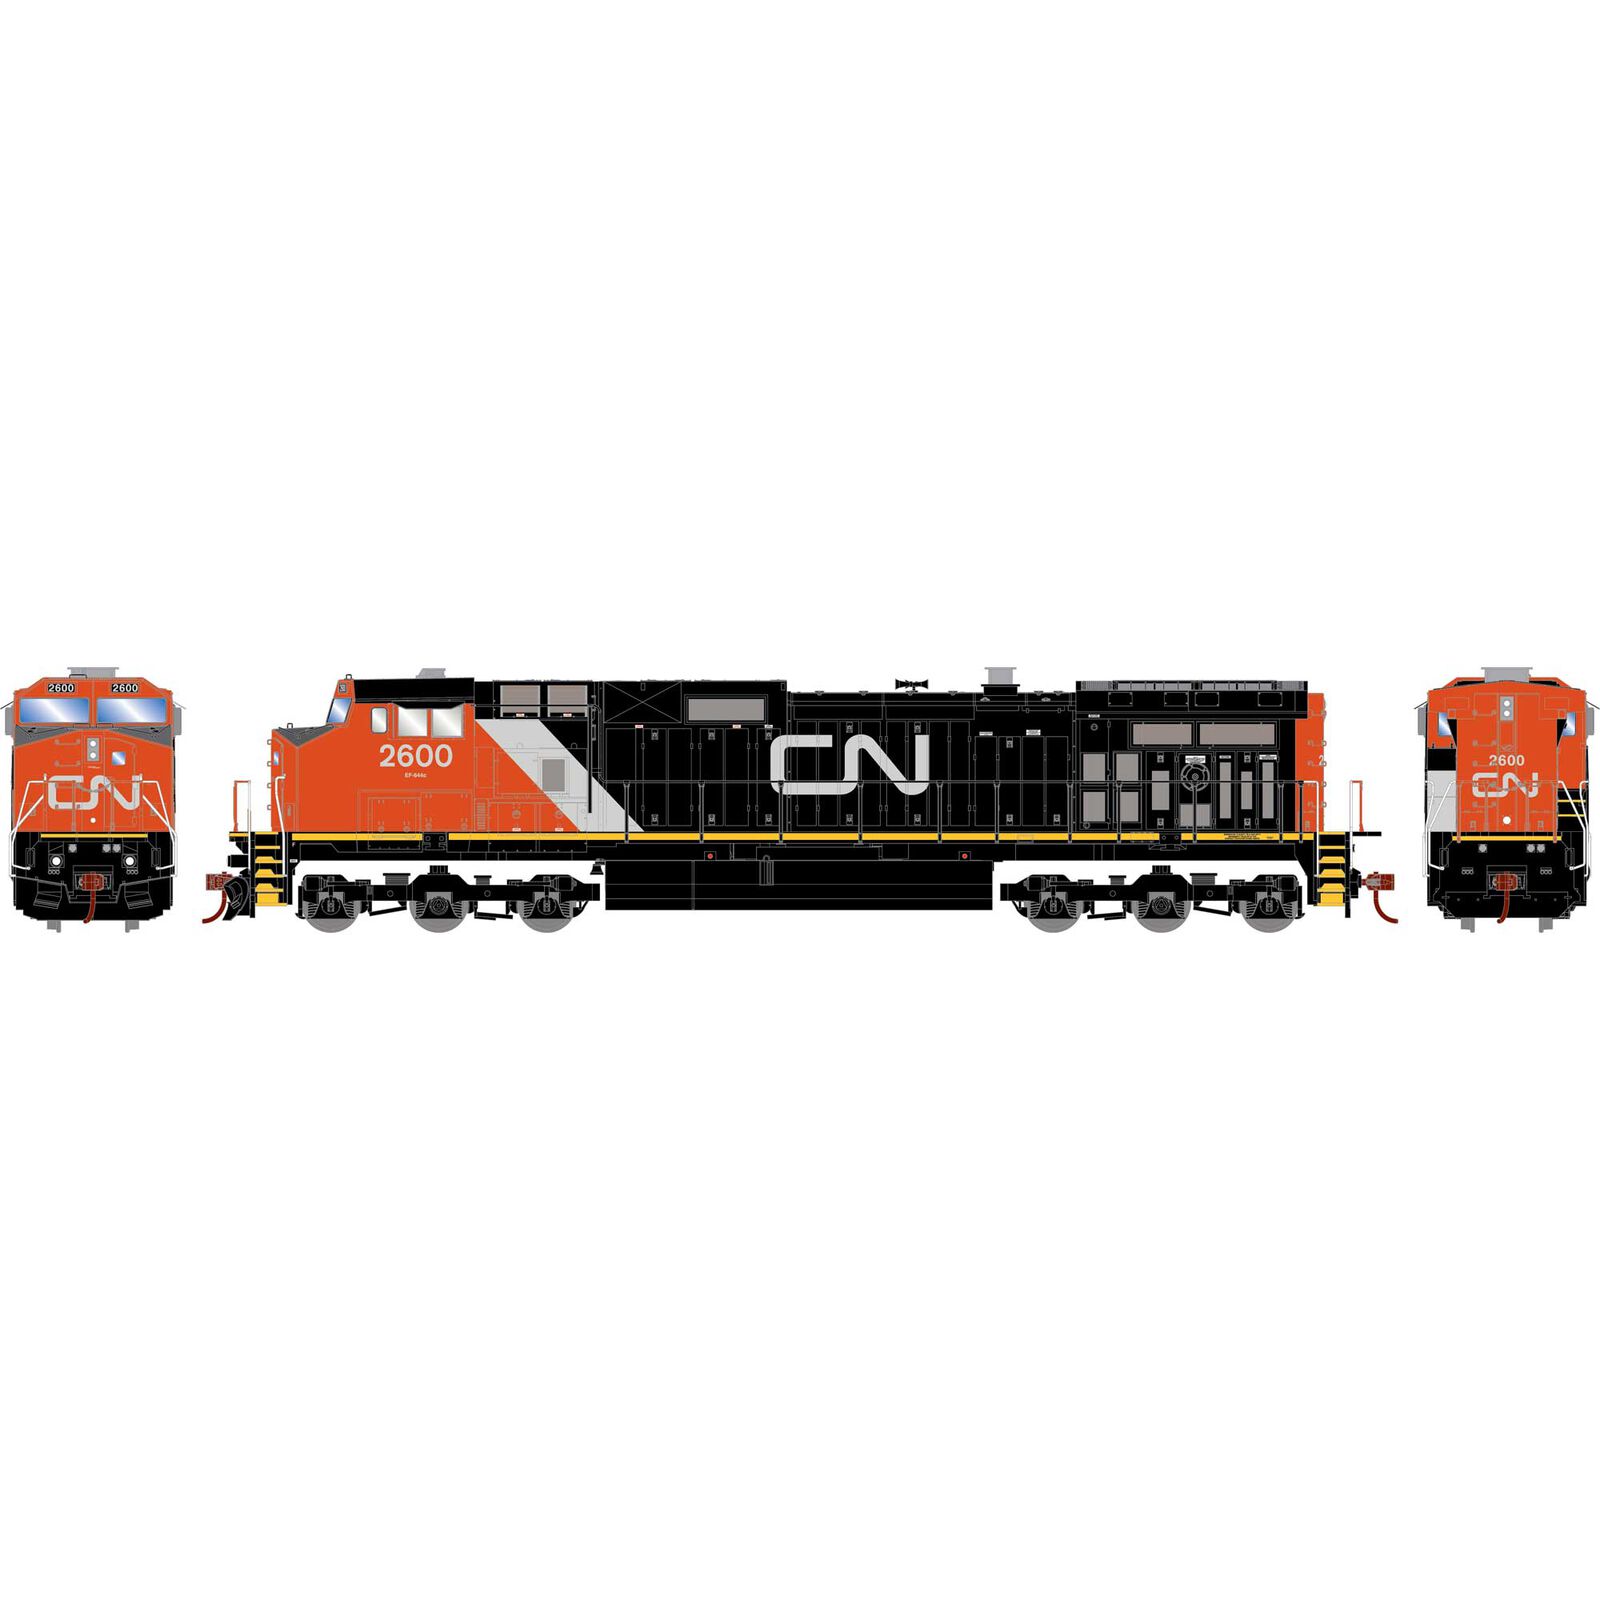 HO Dash 9-44CW Locomotive Sound-Ready, CN #2600